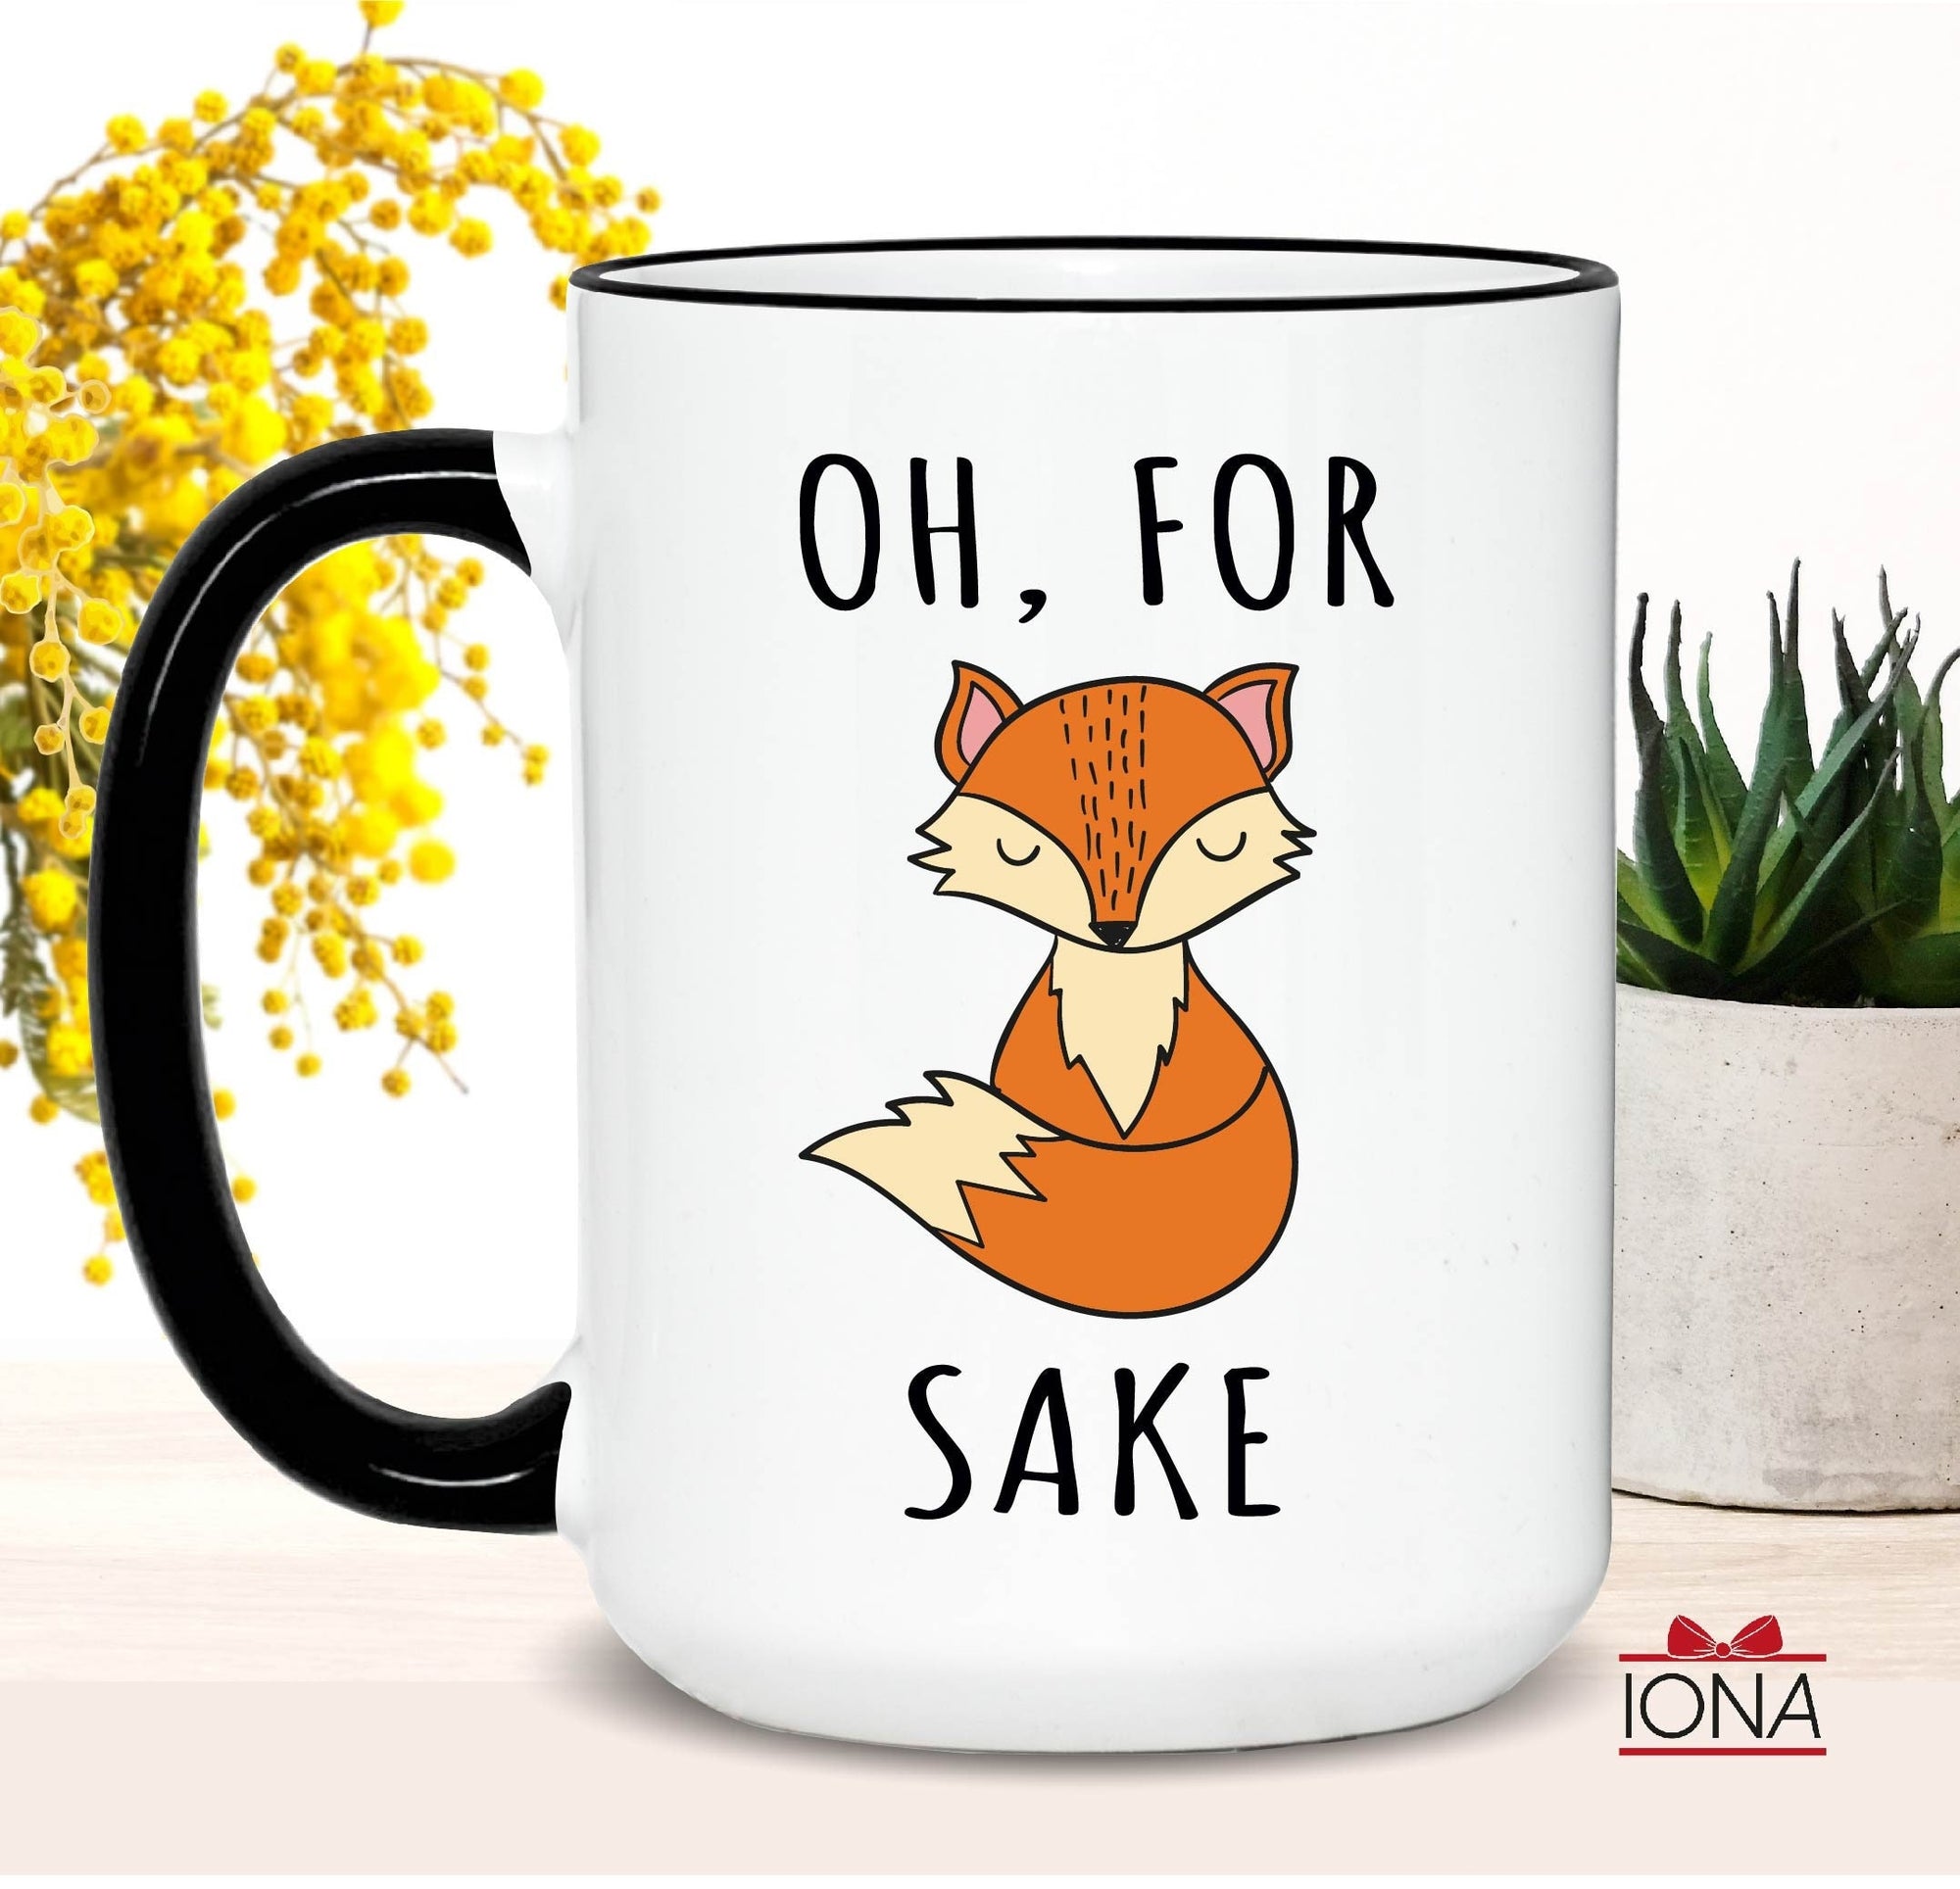 Oh, for fox sake, Coffee mug, Fox coffee mug, Coffee cup, Fox Lover Gift, For Fox sake, Funny Fox Mug, Coworker Gift, Office Mug, sarcastic